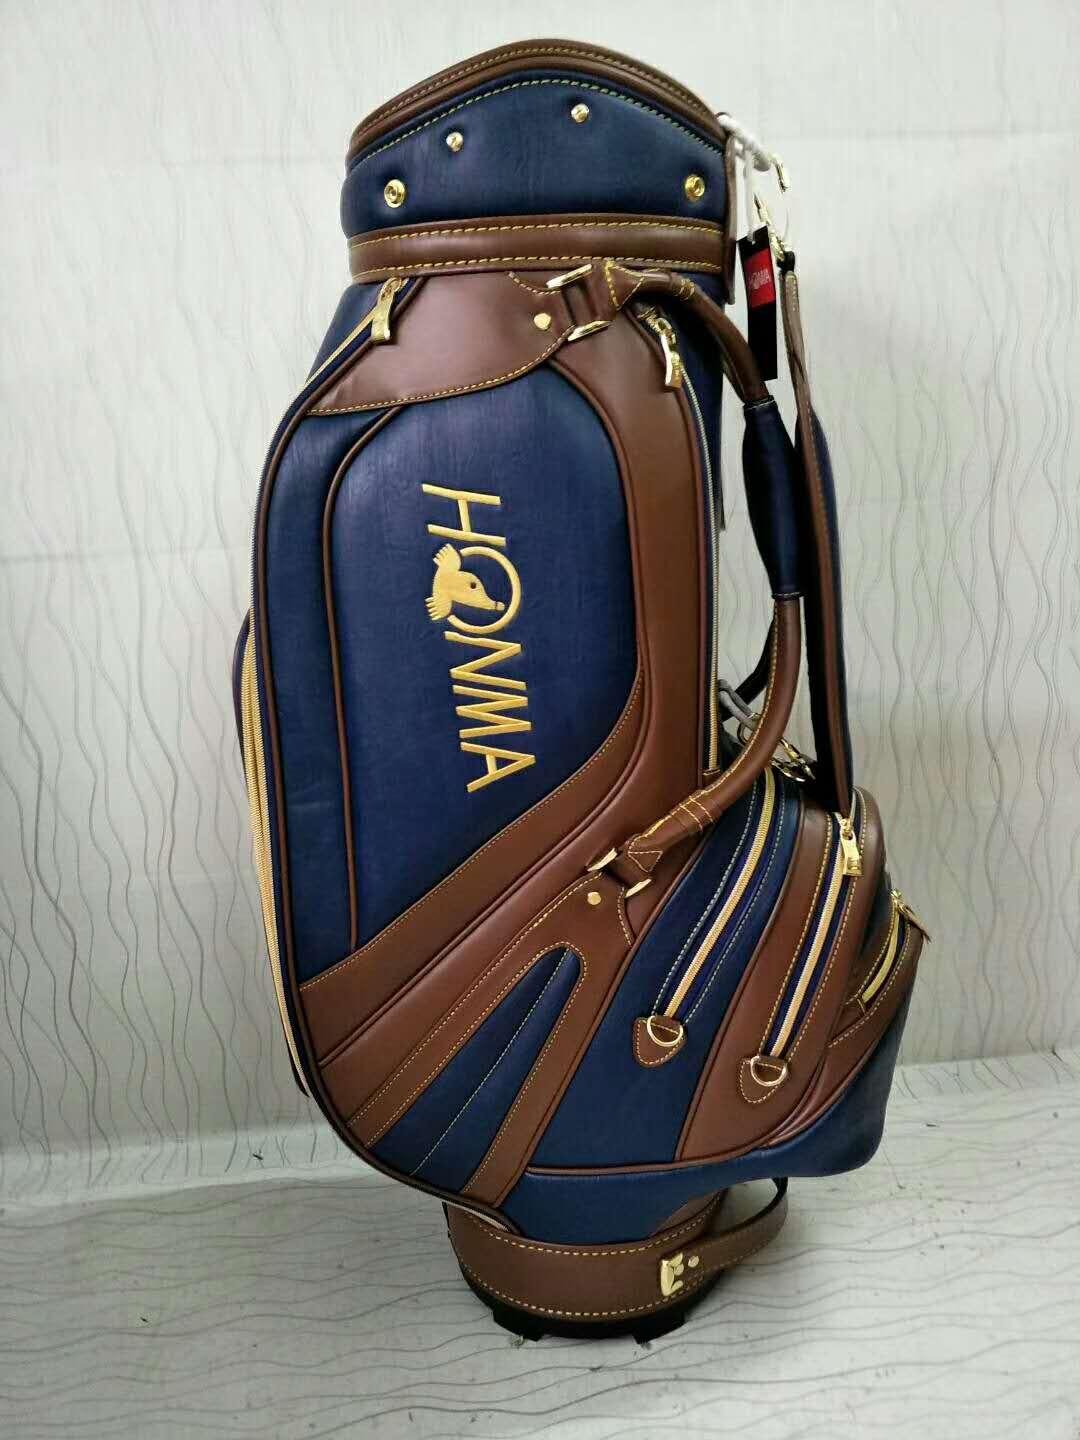 Homa carry/ stand golf bag 4